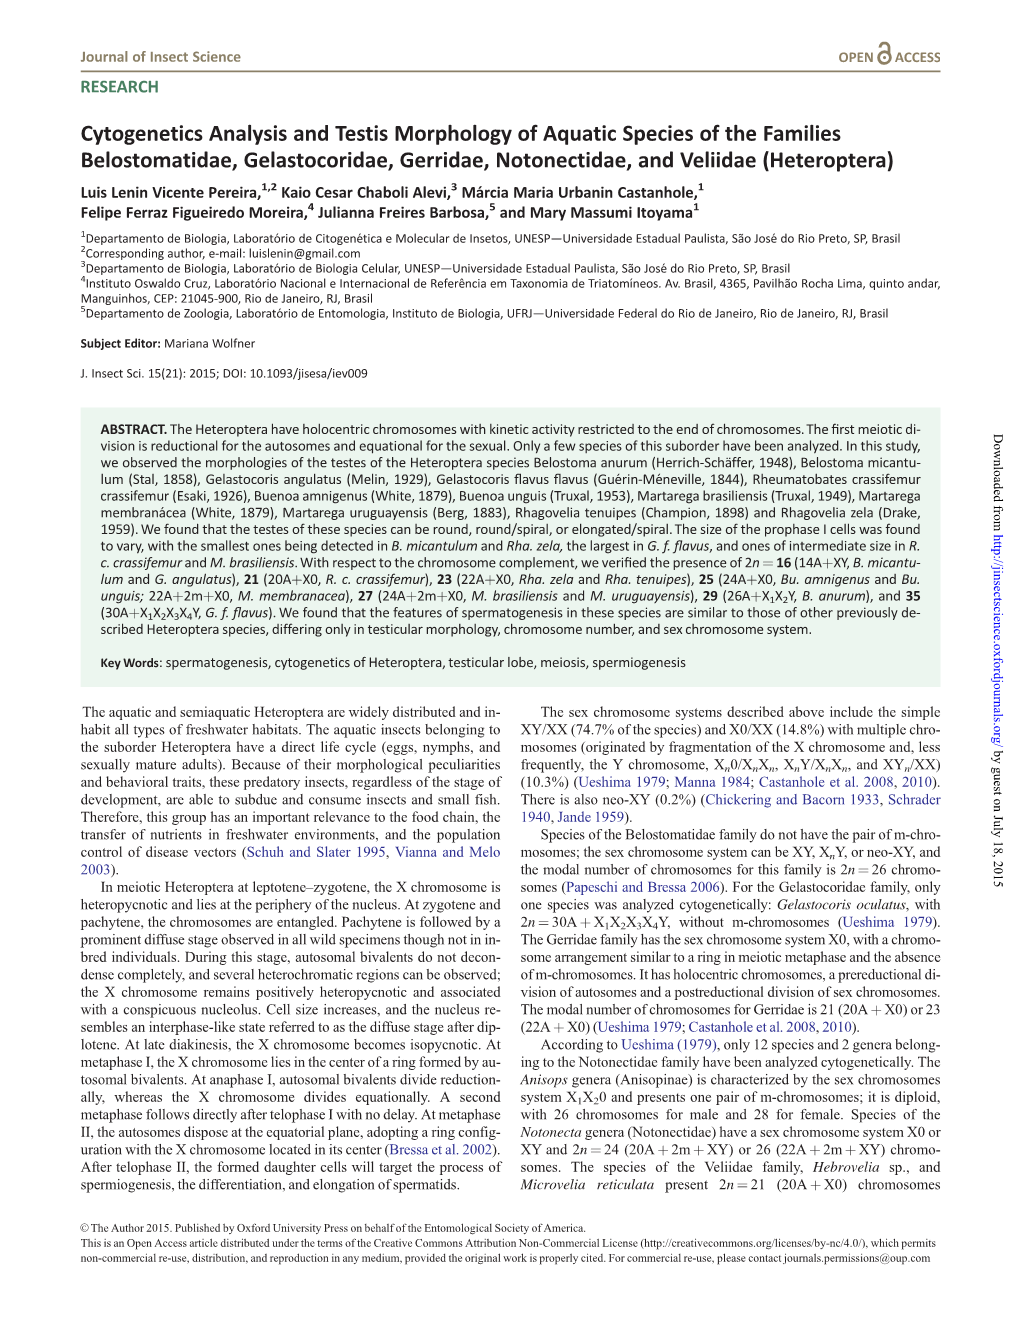 Cytogenetics Analysis and Testis Morphology of Aquatic Species Of